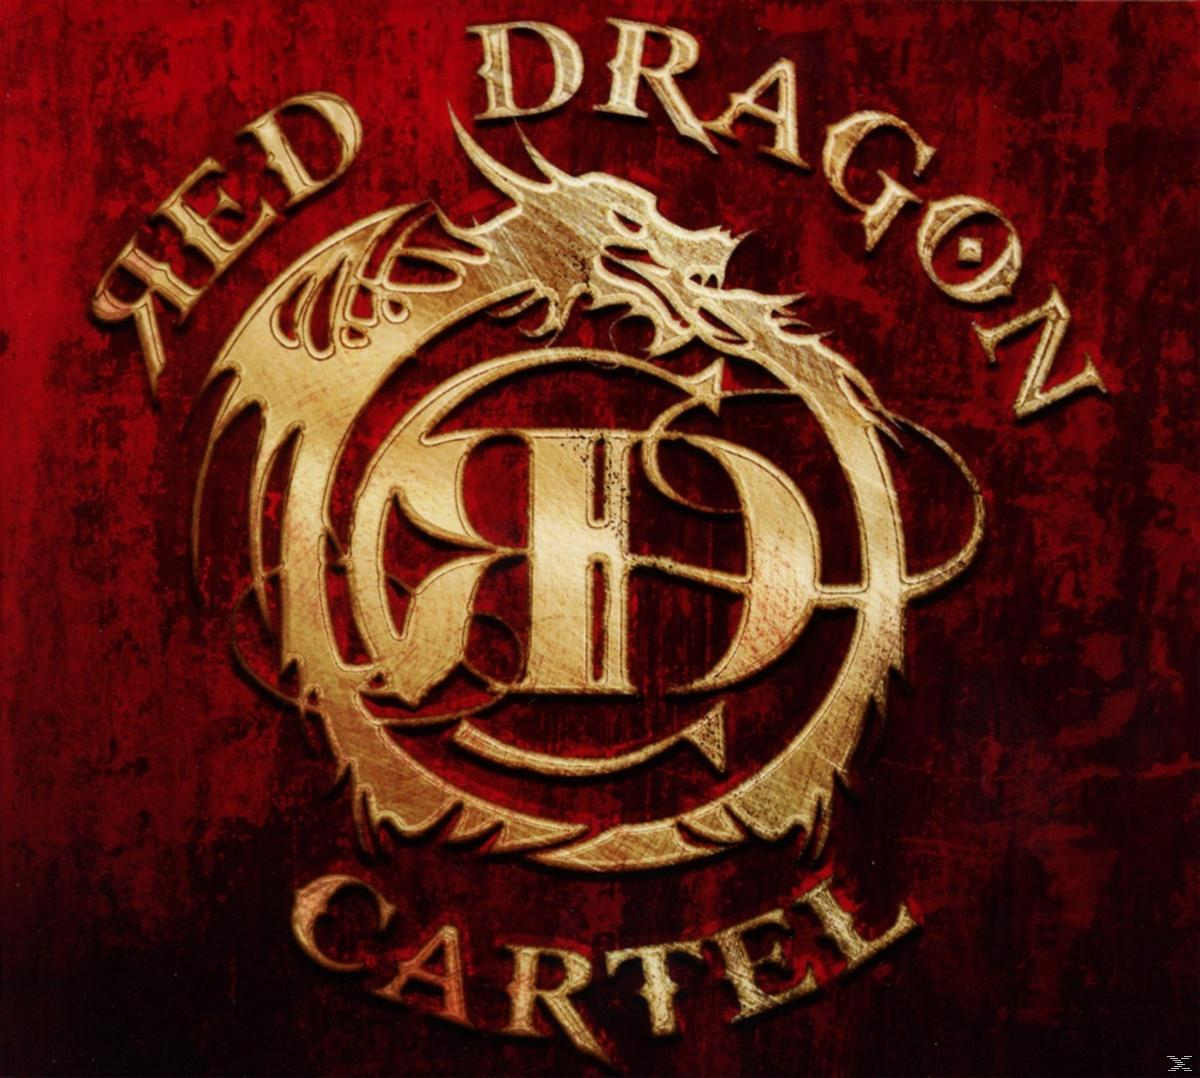 - (CD) Dragon - Red Red Cartel Cartel Dragon